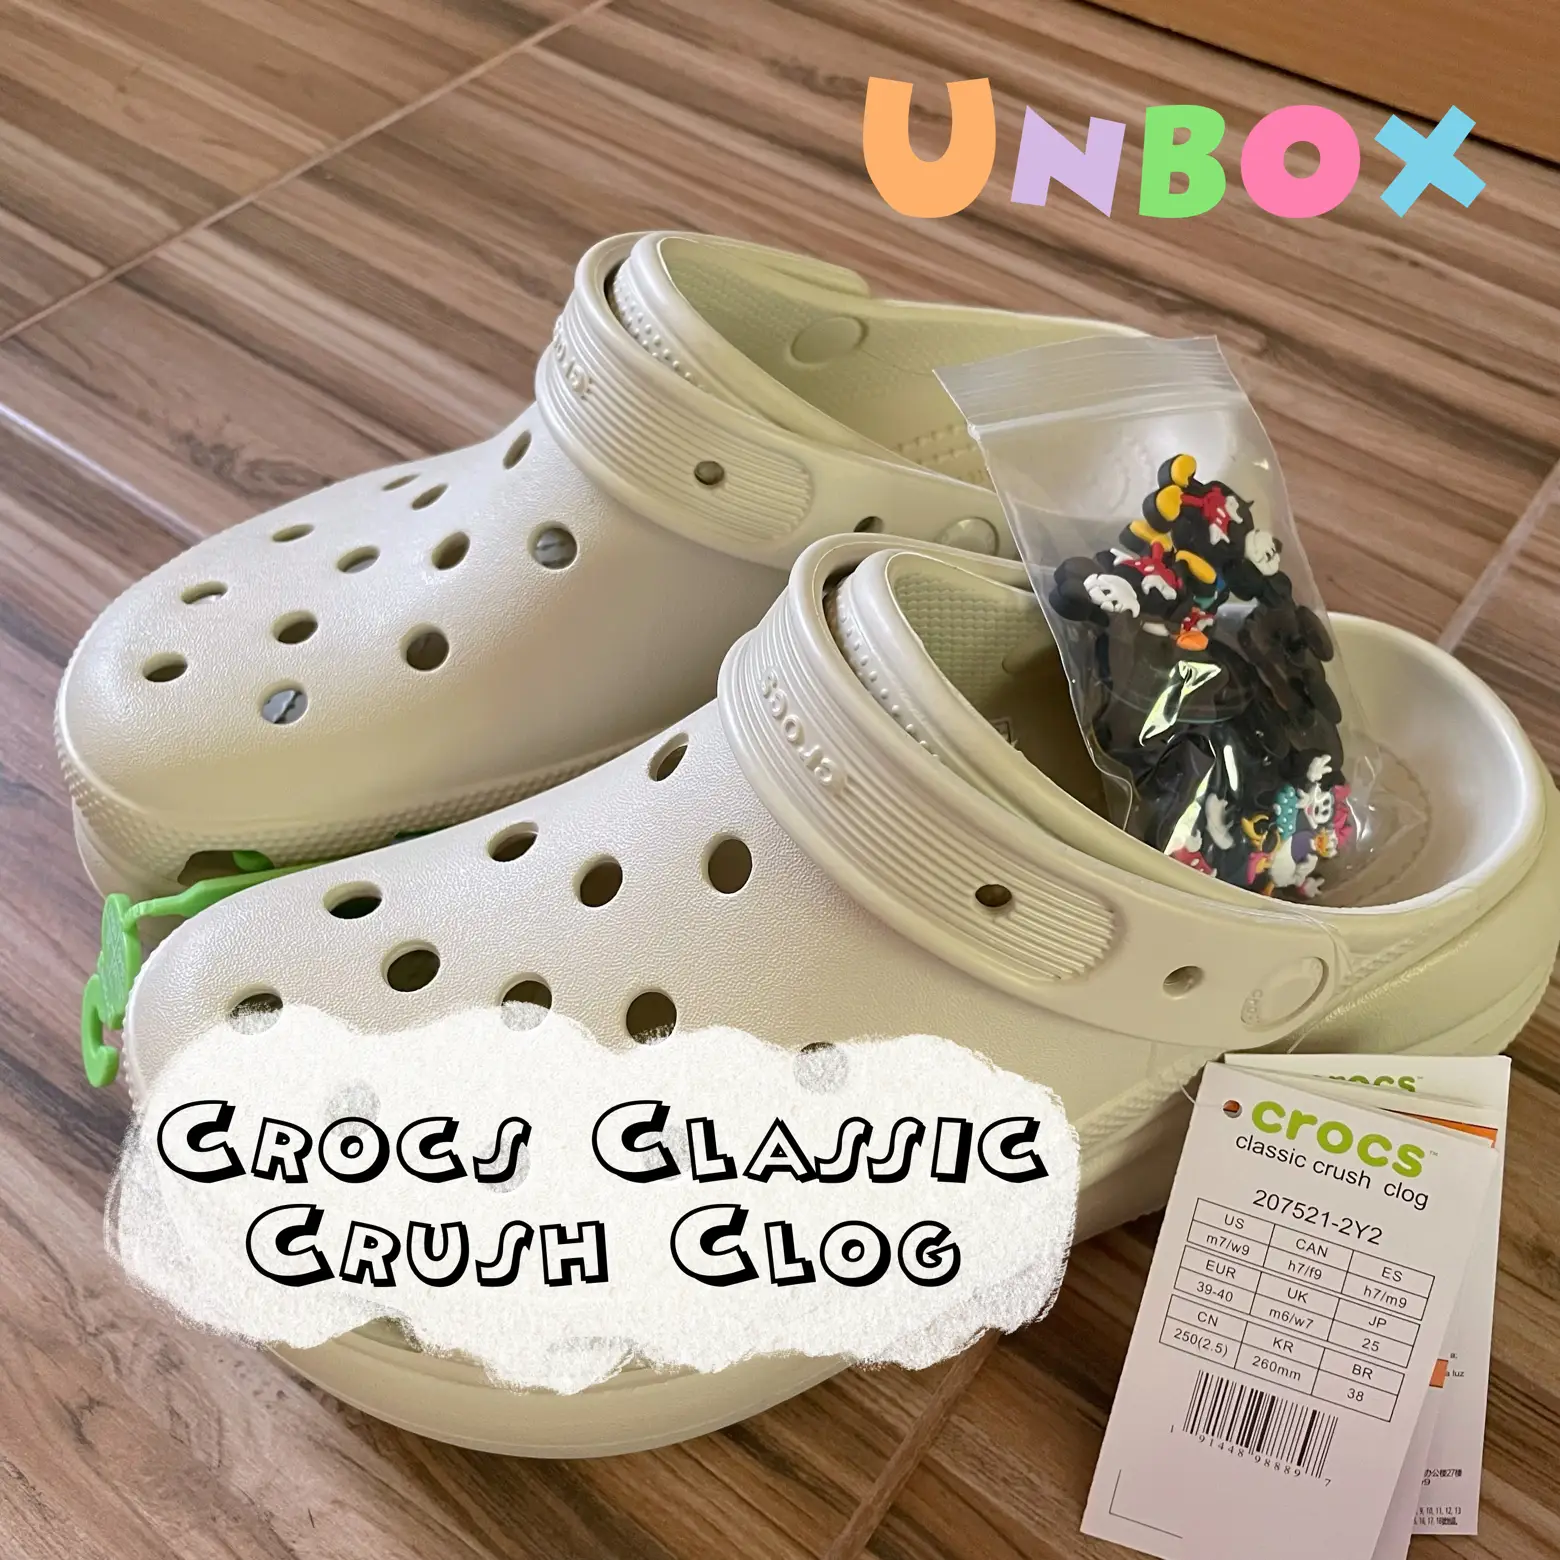  Crocs: Glitz & Glam